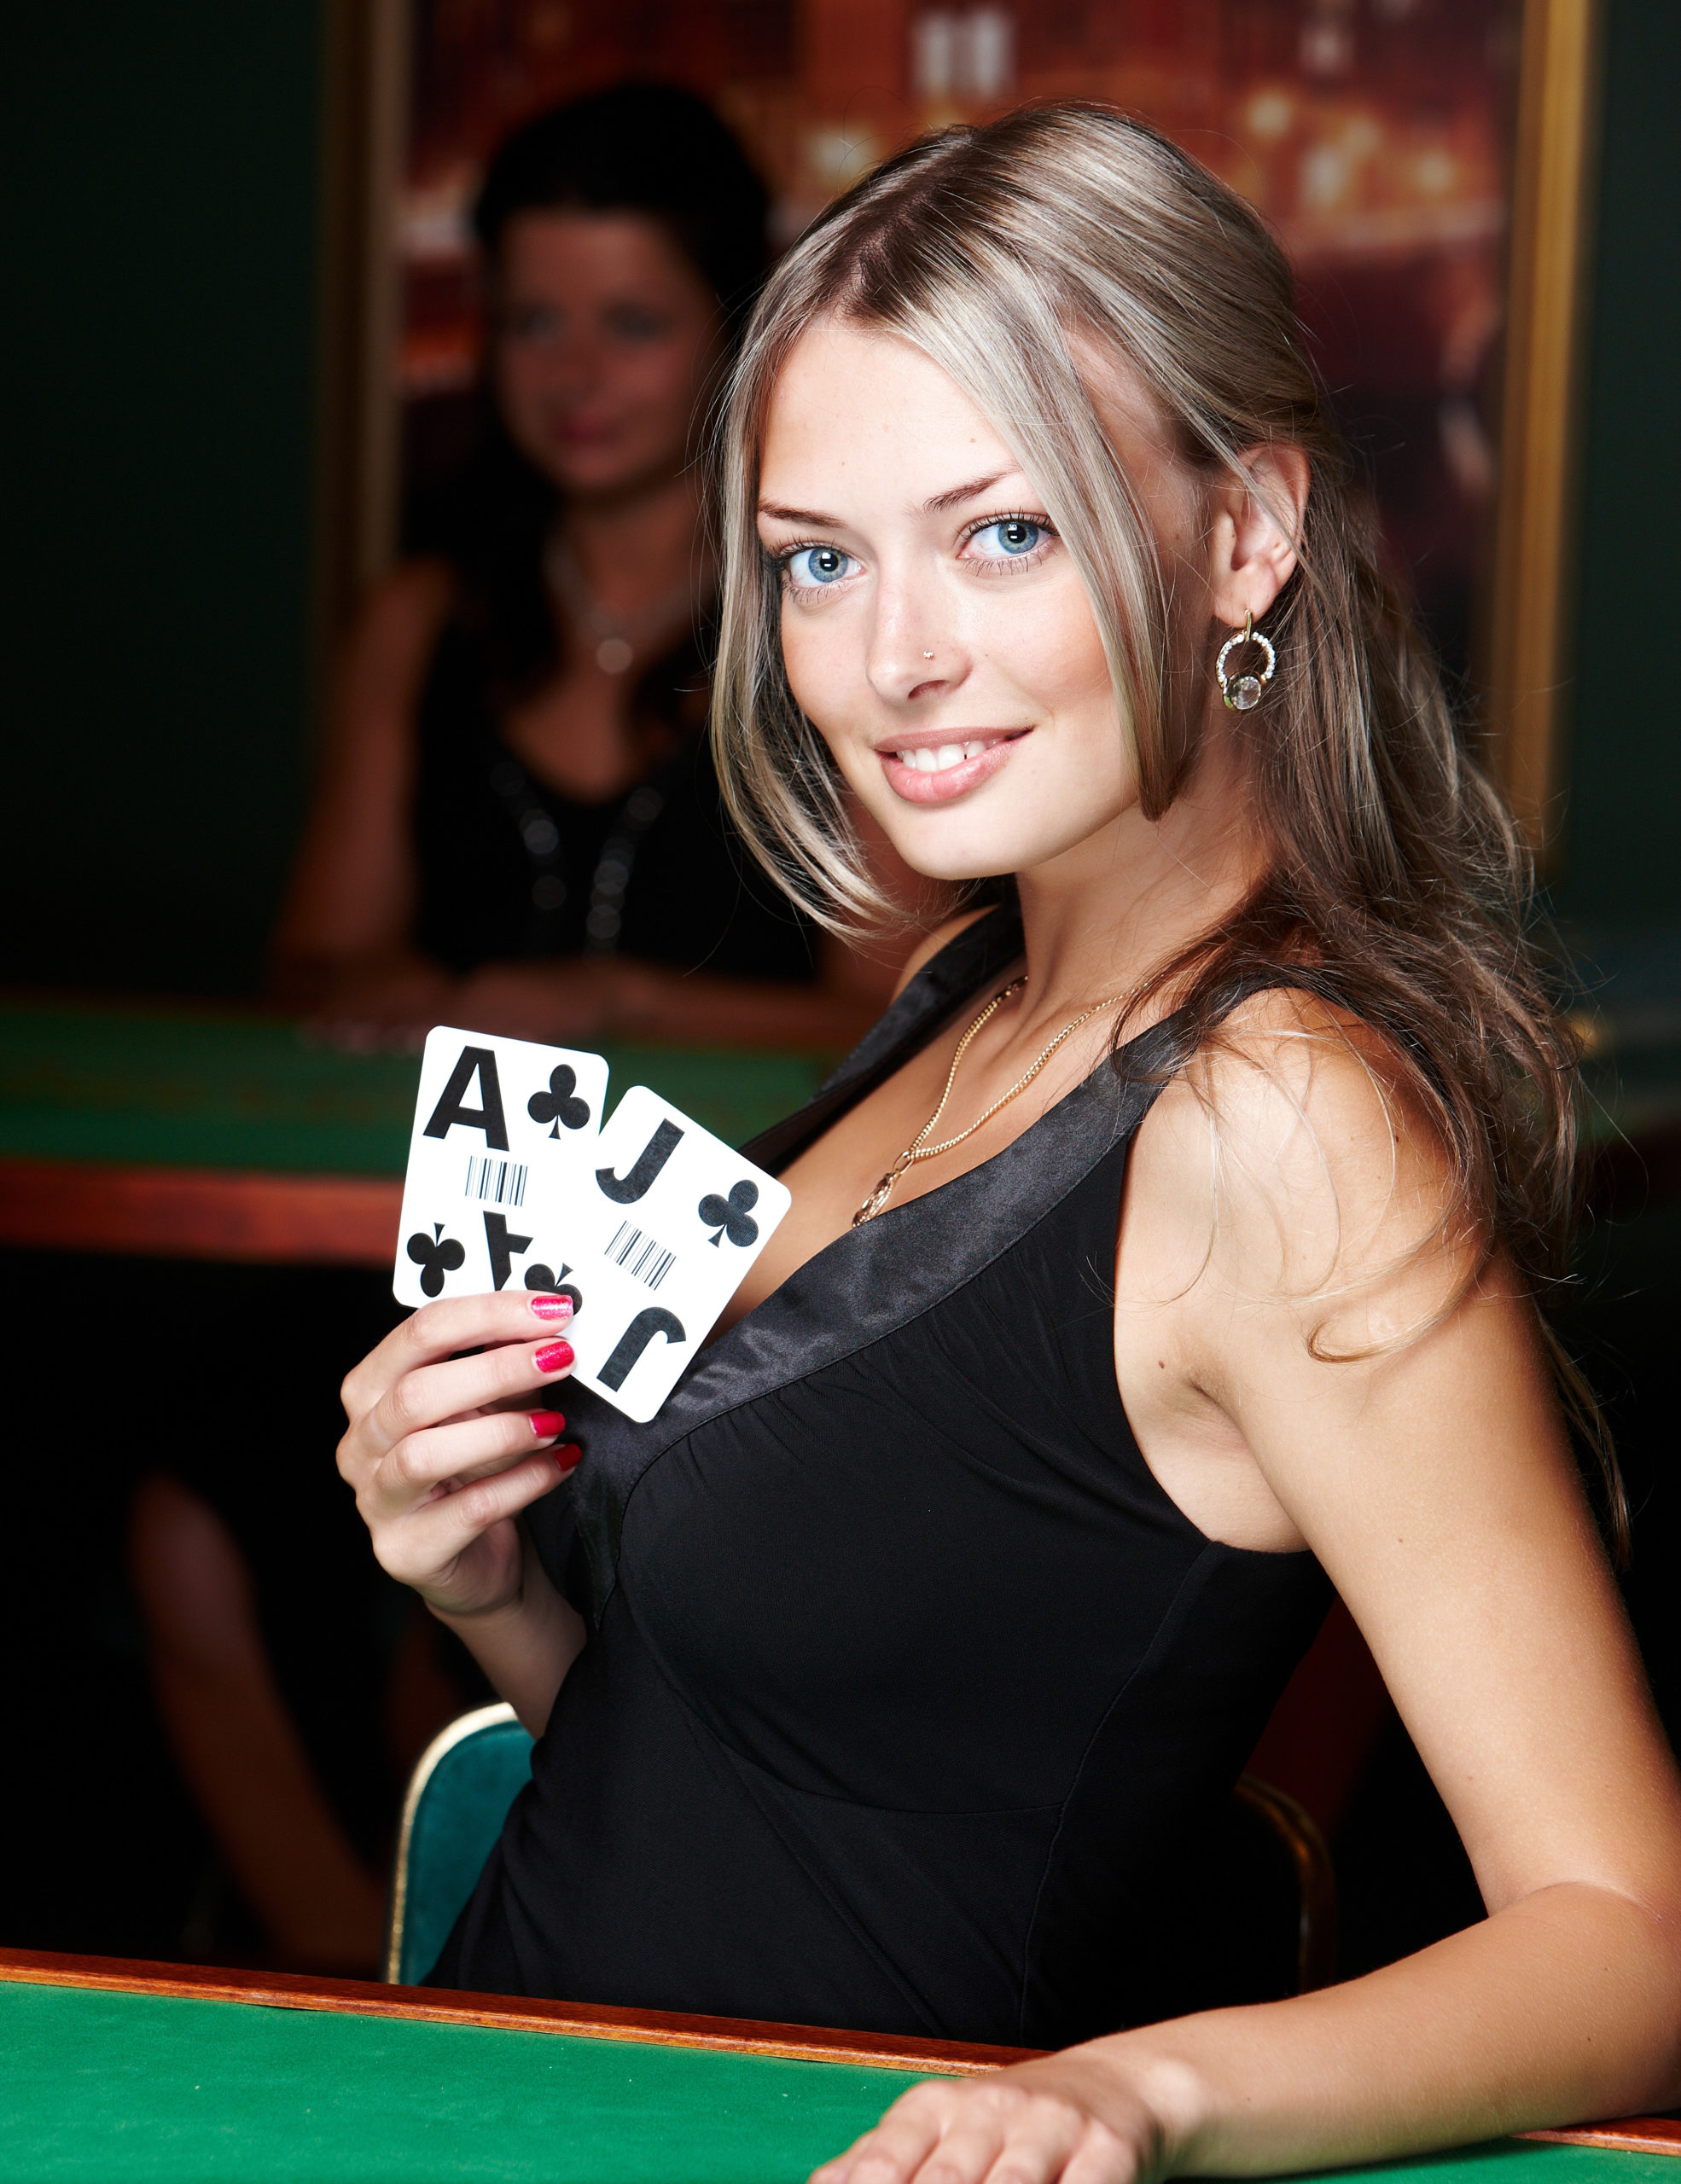 Девочка в предвкушении азарта. Фотосессия в казино. Девушки в казино. Покер девушки.